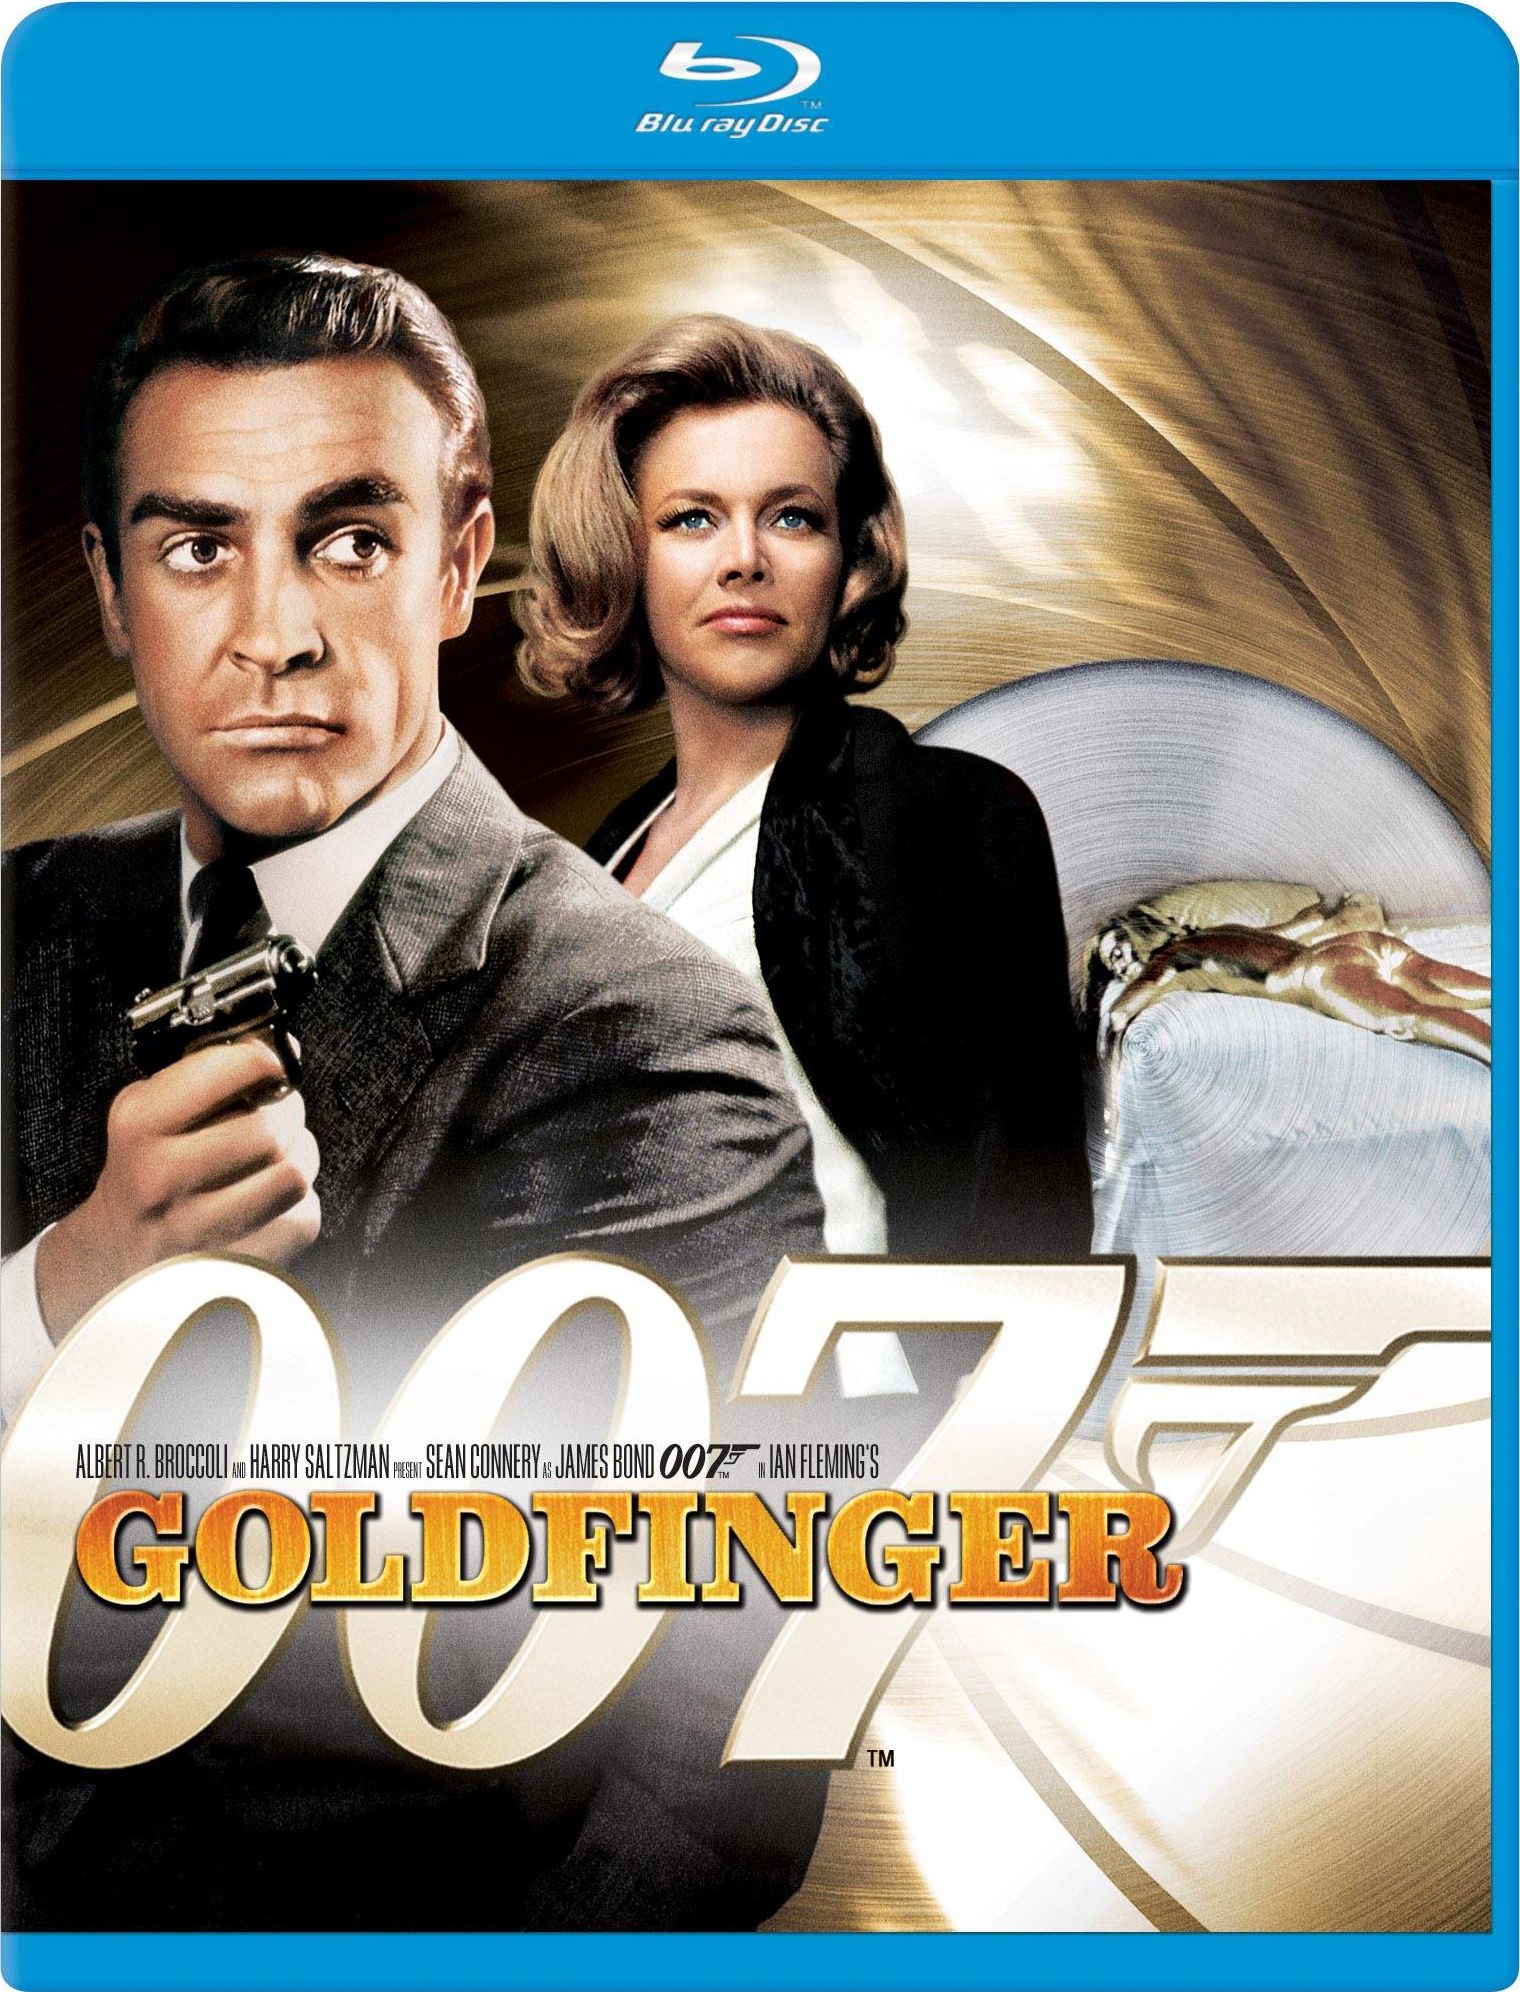 Goldfinger DVD Release Date